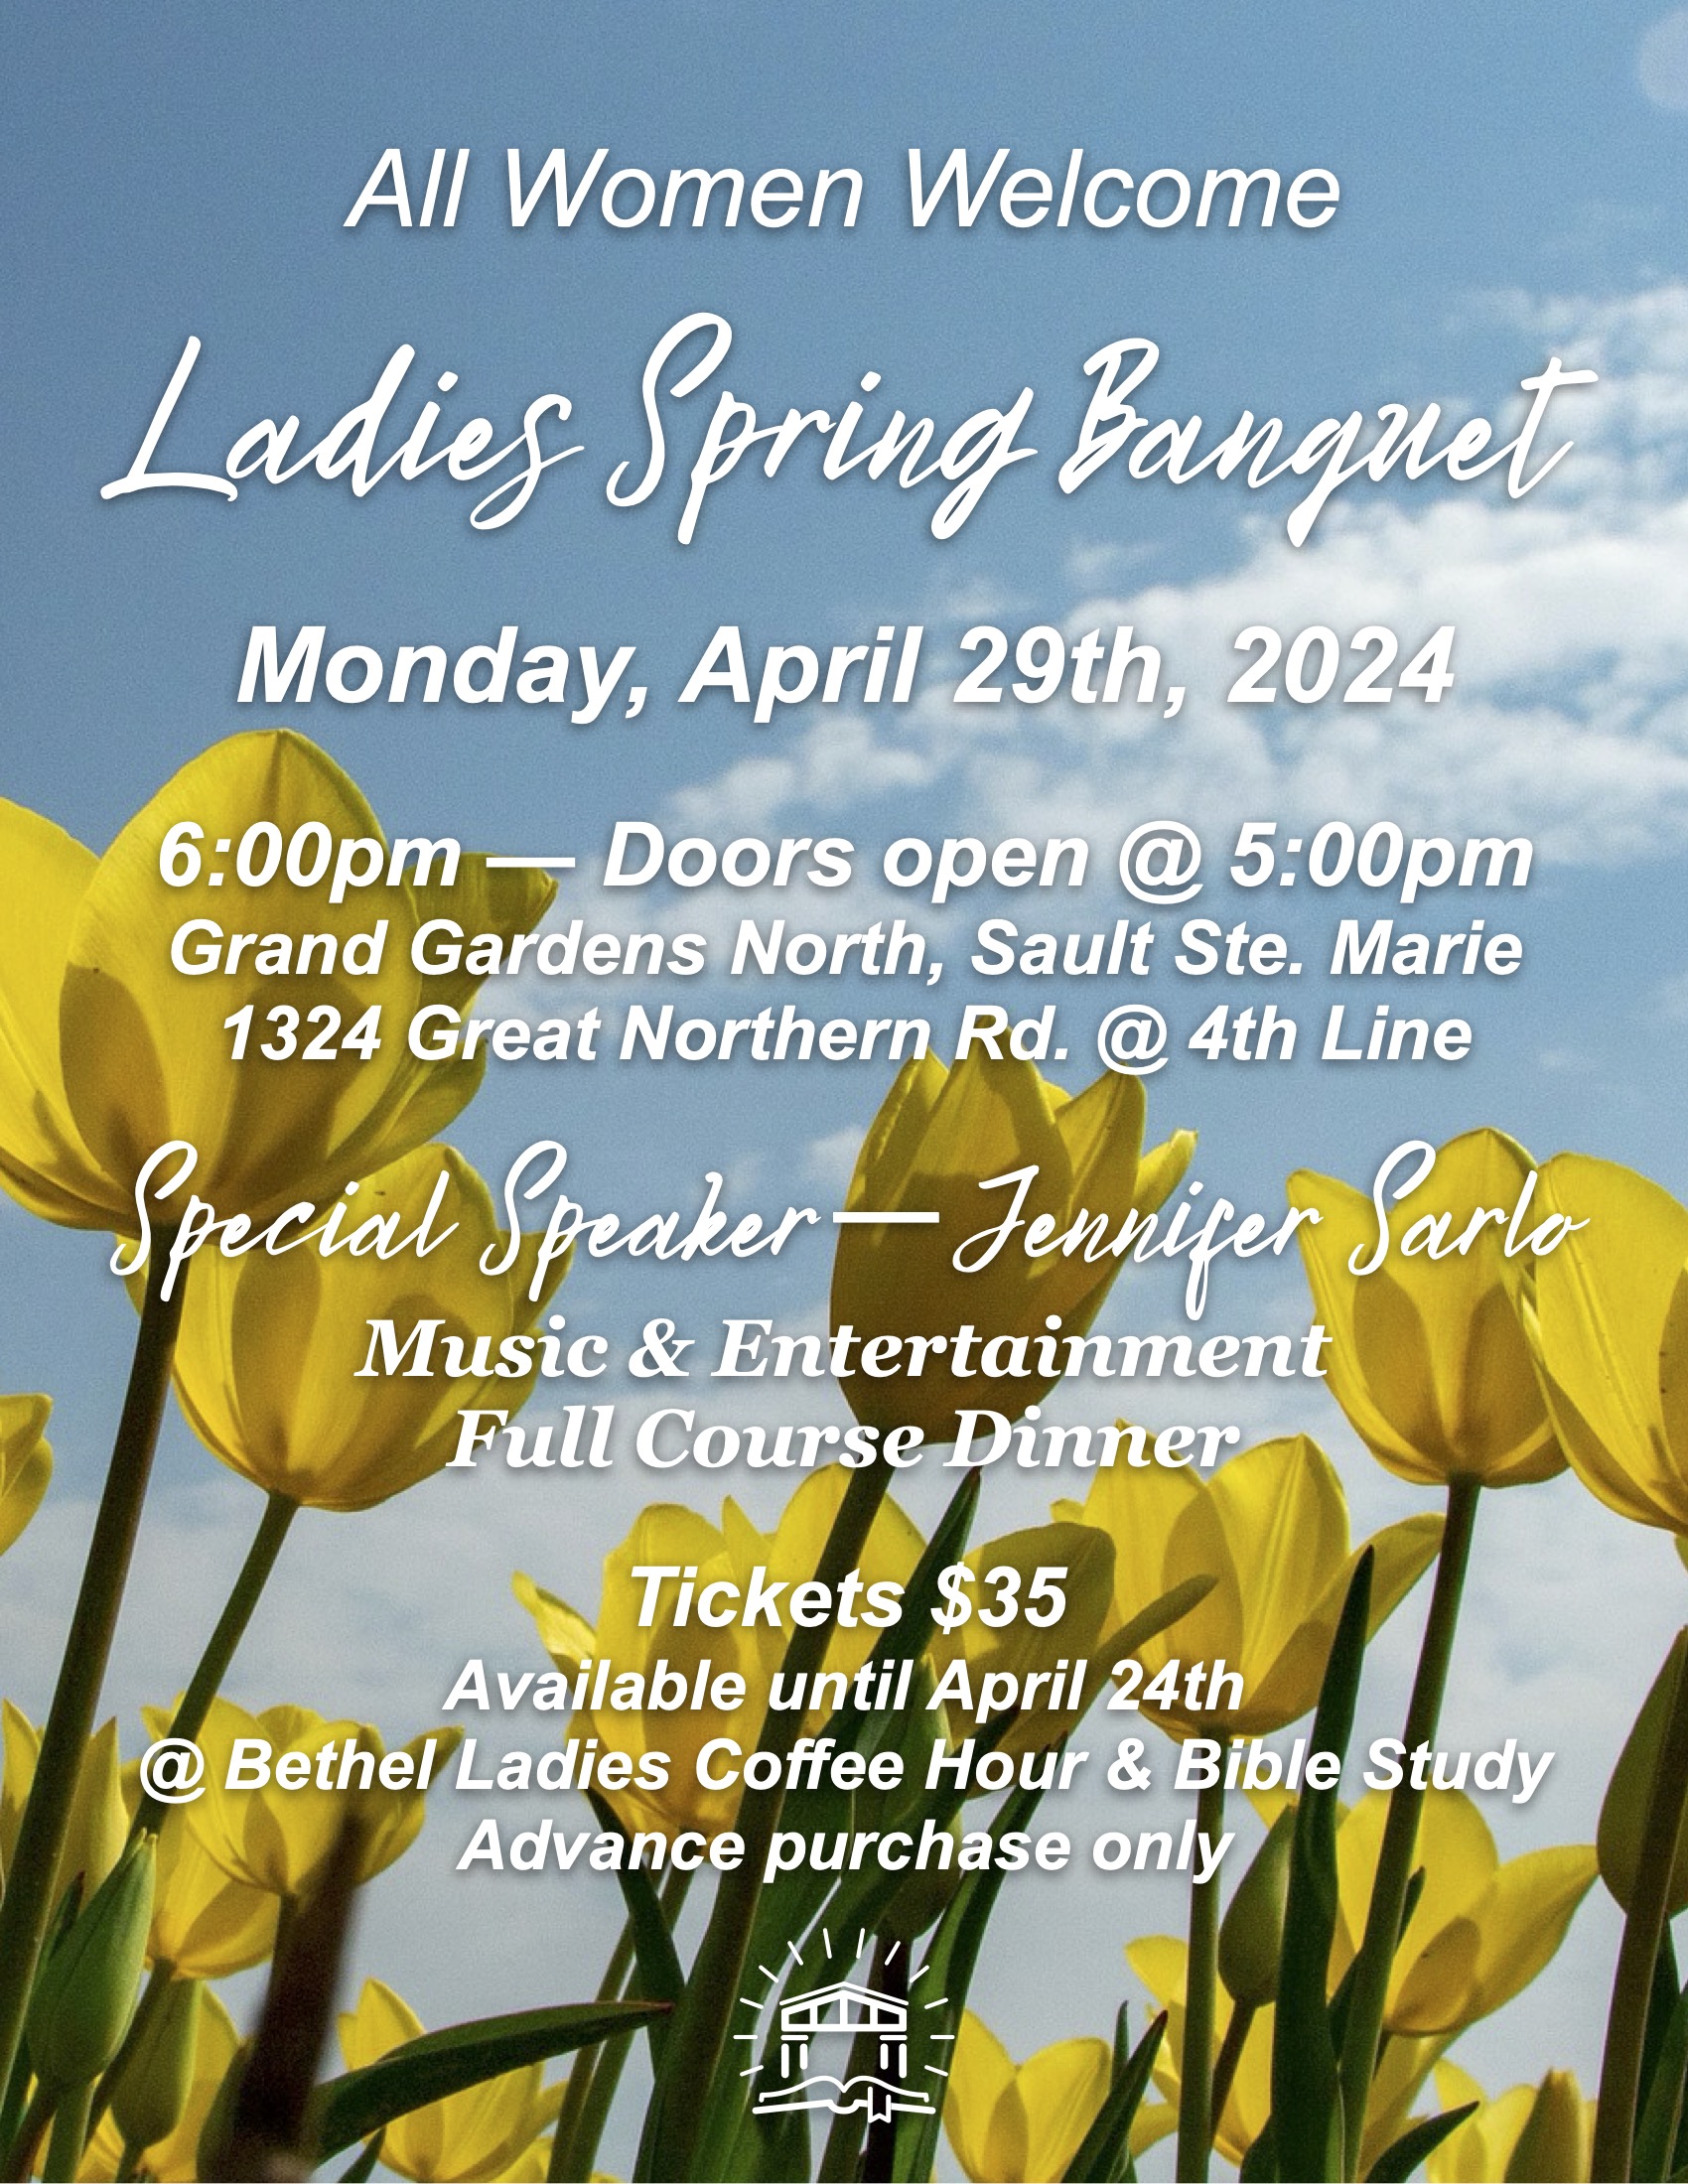 Ladies Spring Banquet Poster 2